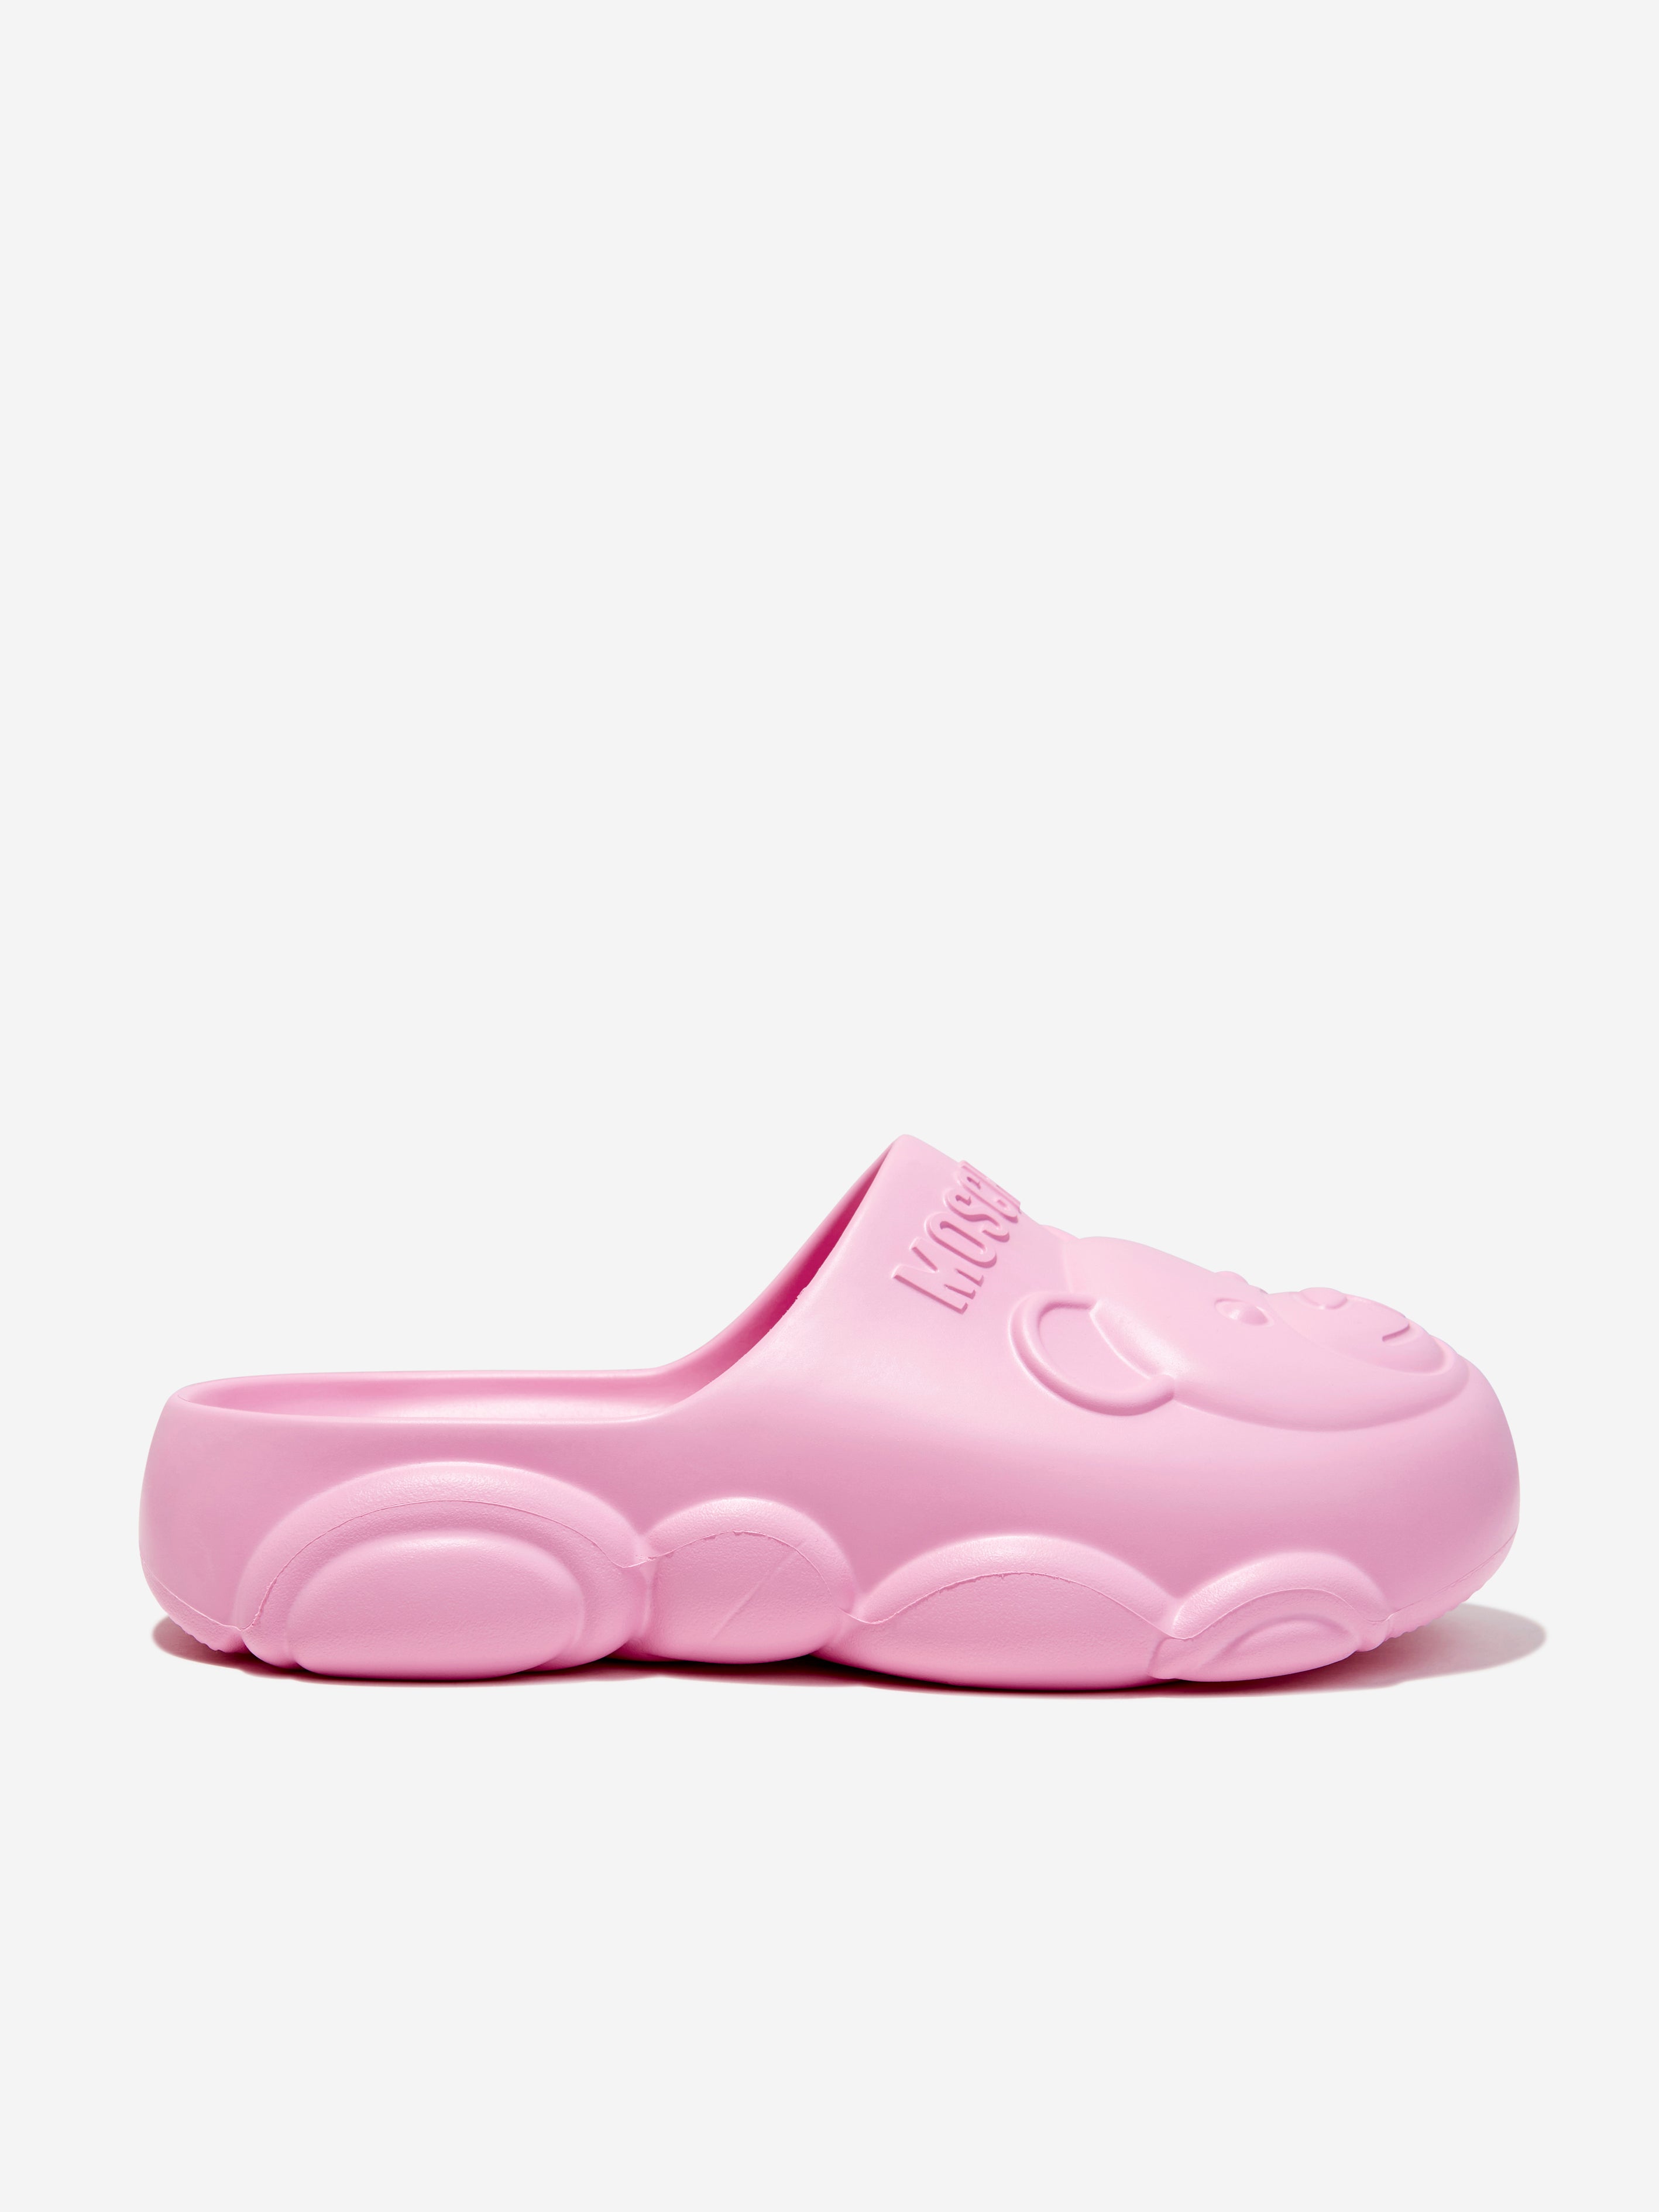 Girls Teddy Bear Eva Clogs in Pink | Childsplay Clothing